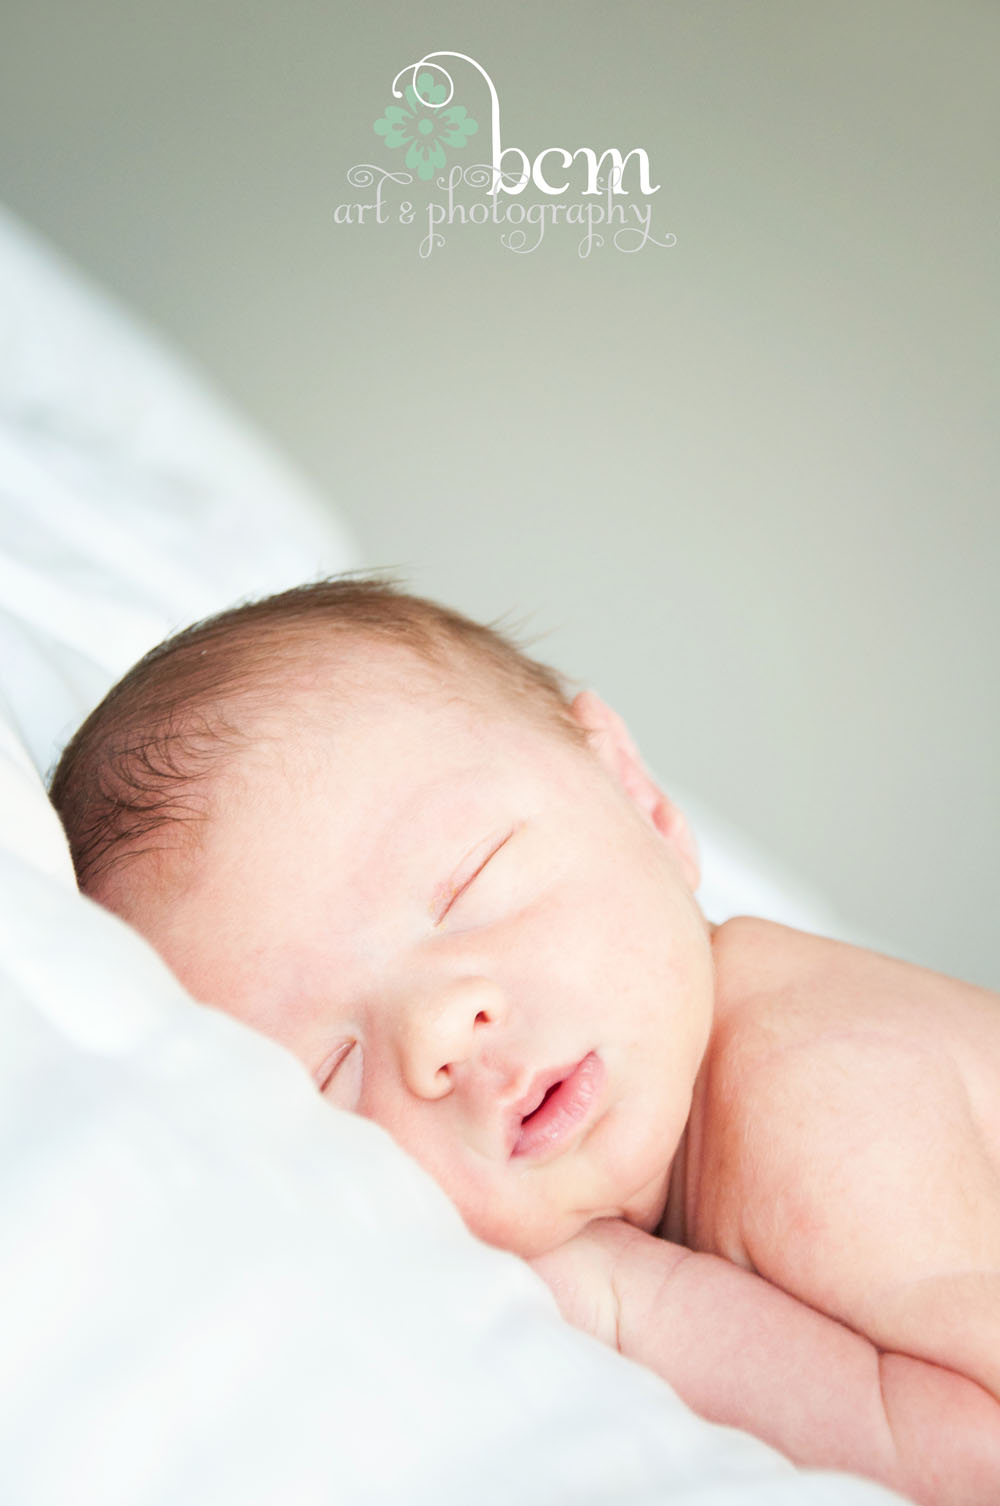 Newborn Portraits, bcm art & photography 2014